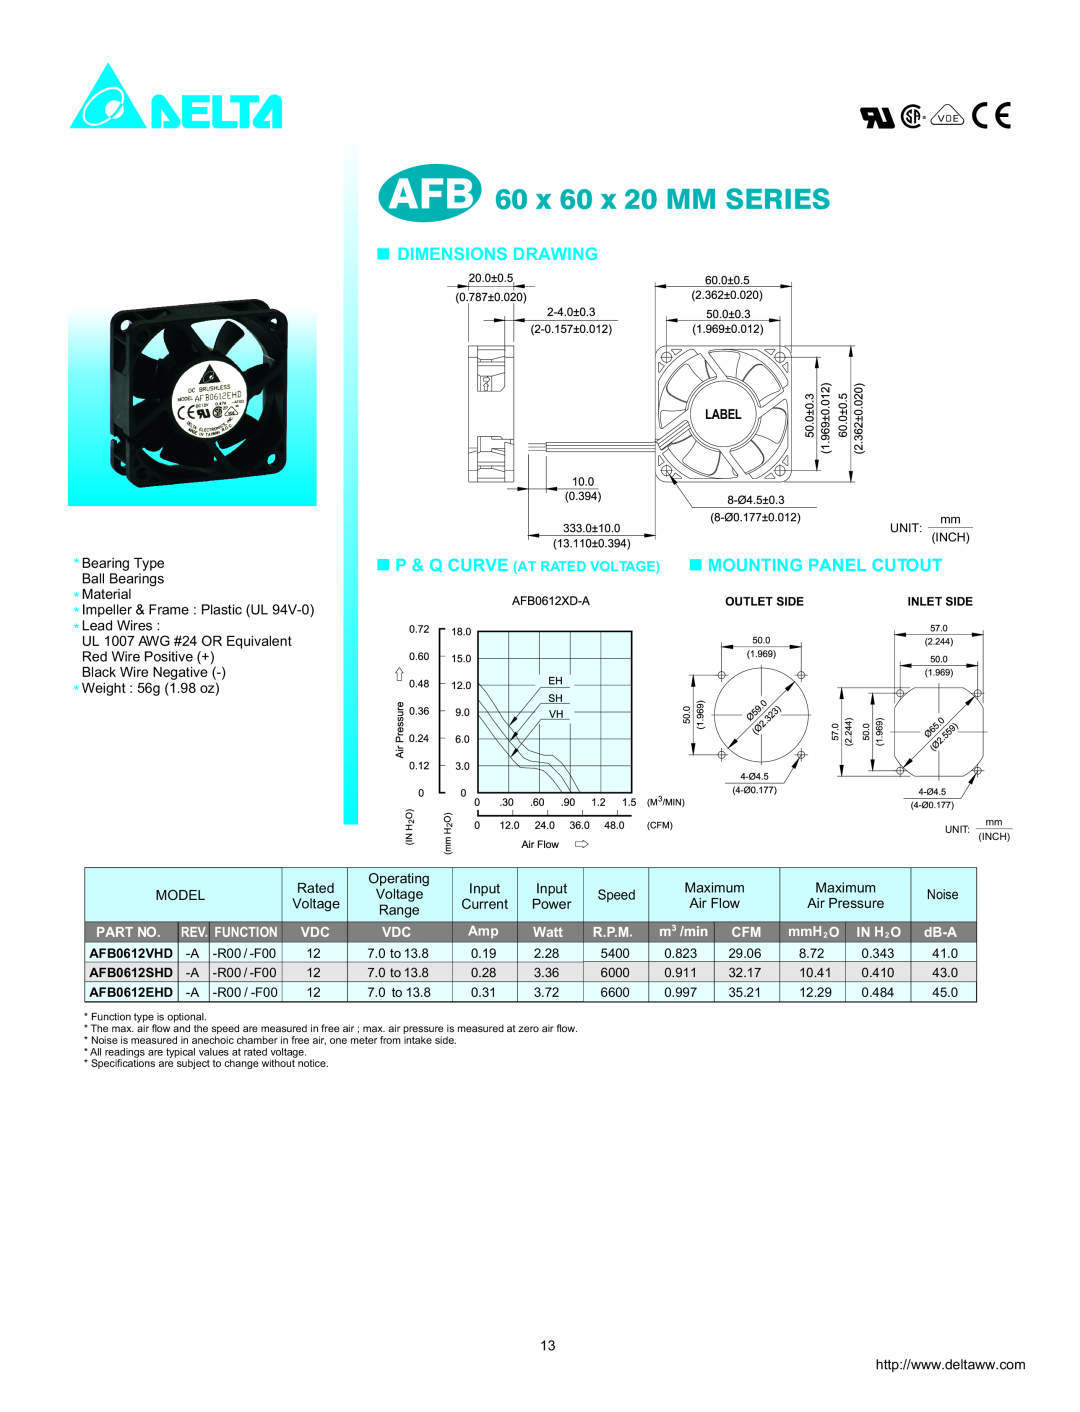 Delta Electronics AFB0605HD Rev. Function, mmH 2 O, IN H 2 O, AFB 60 x 60 x 20 MM SERIES, Dimensions Drawing, Watt, R.P.M 